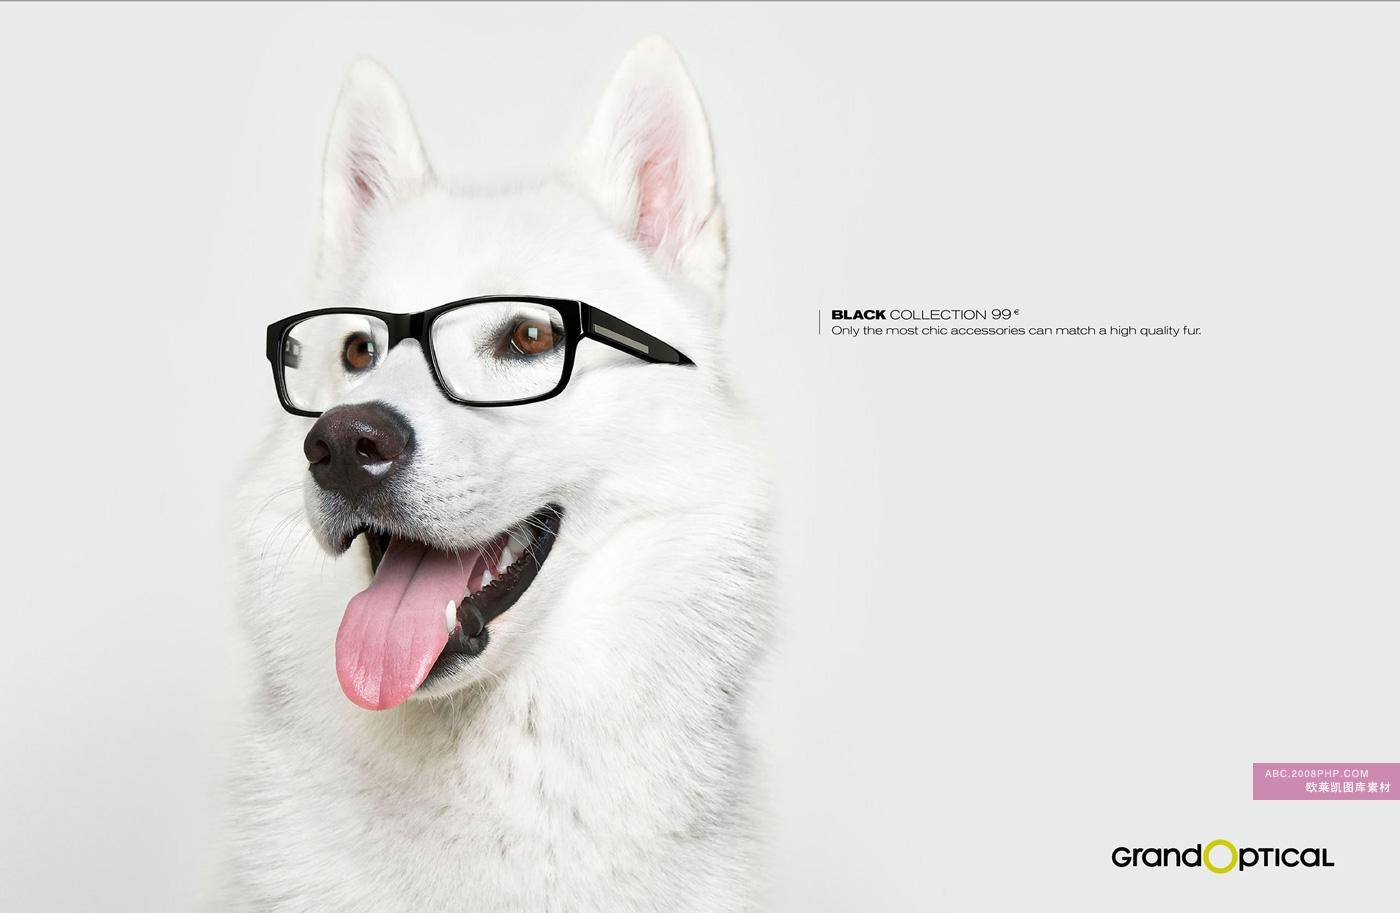 美国nearsightedness dog grand ptical近视眼宠物狗宣传广告欣赏